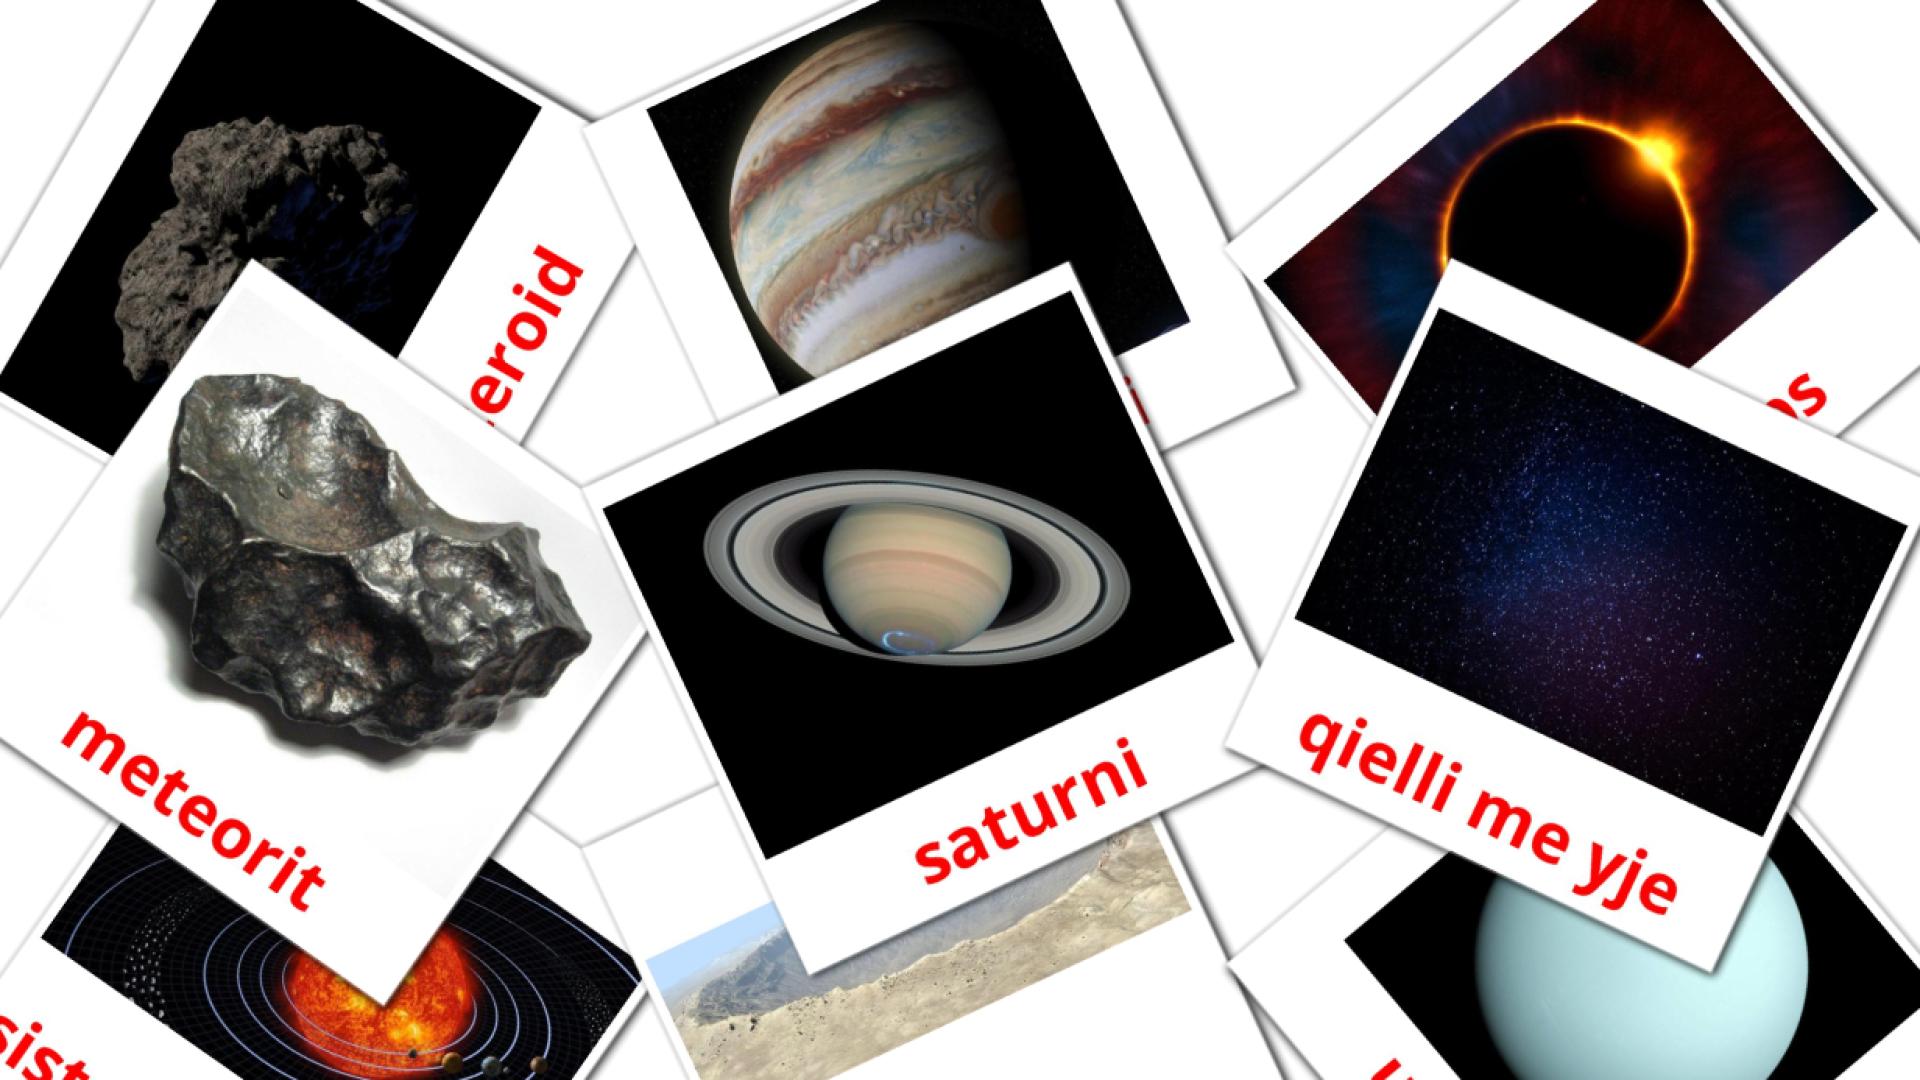 Solar System flashcards